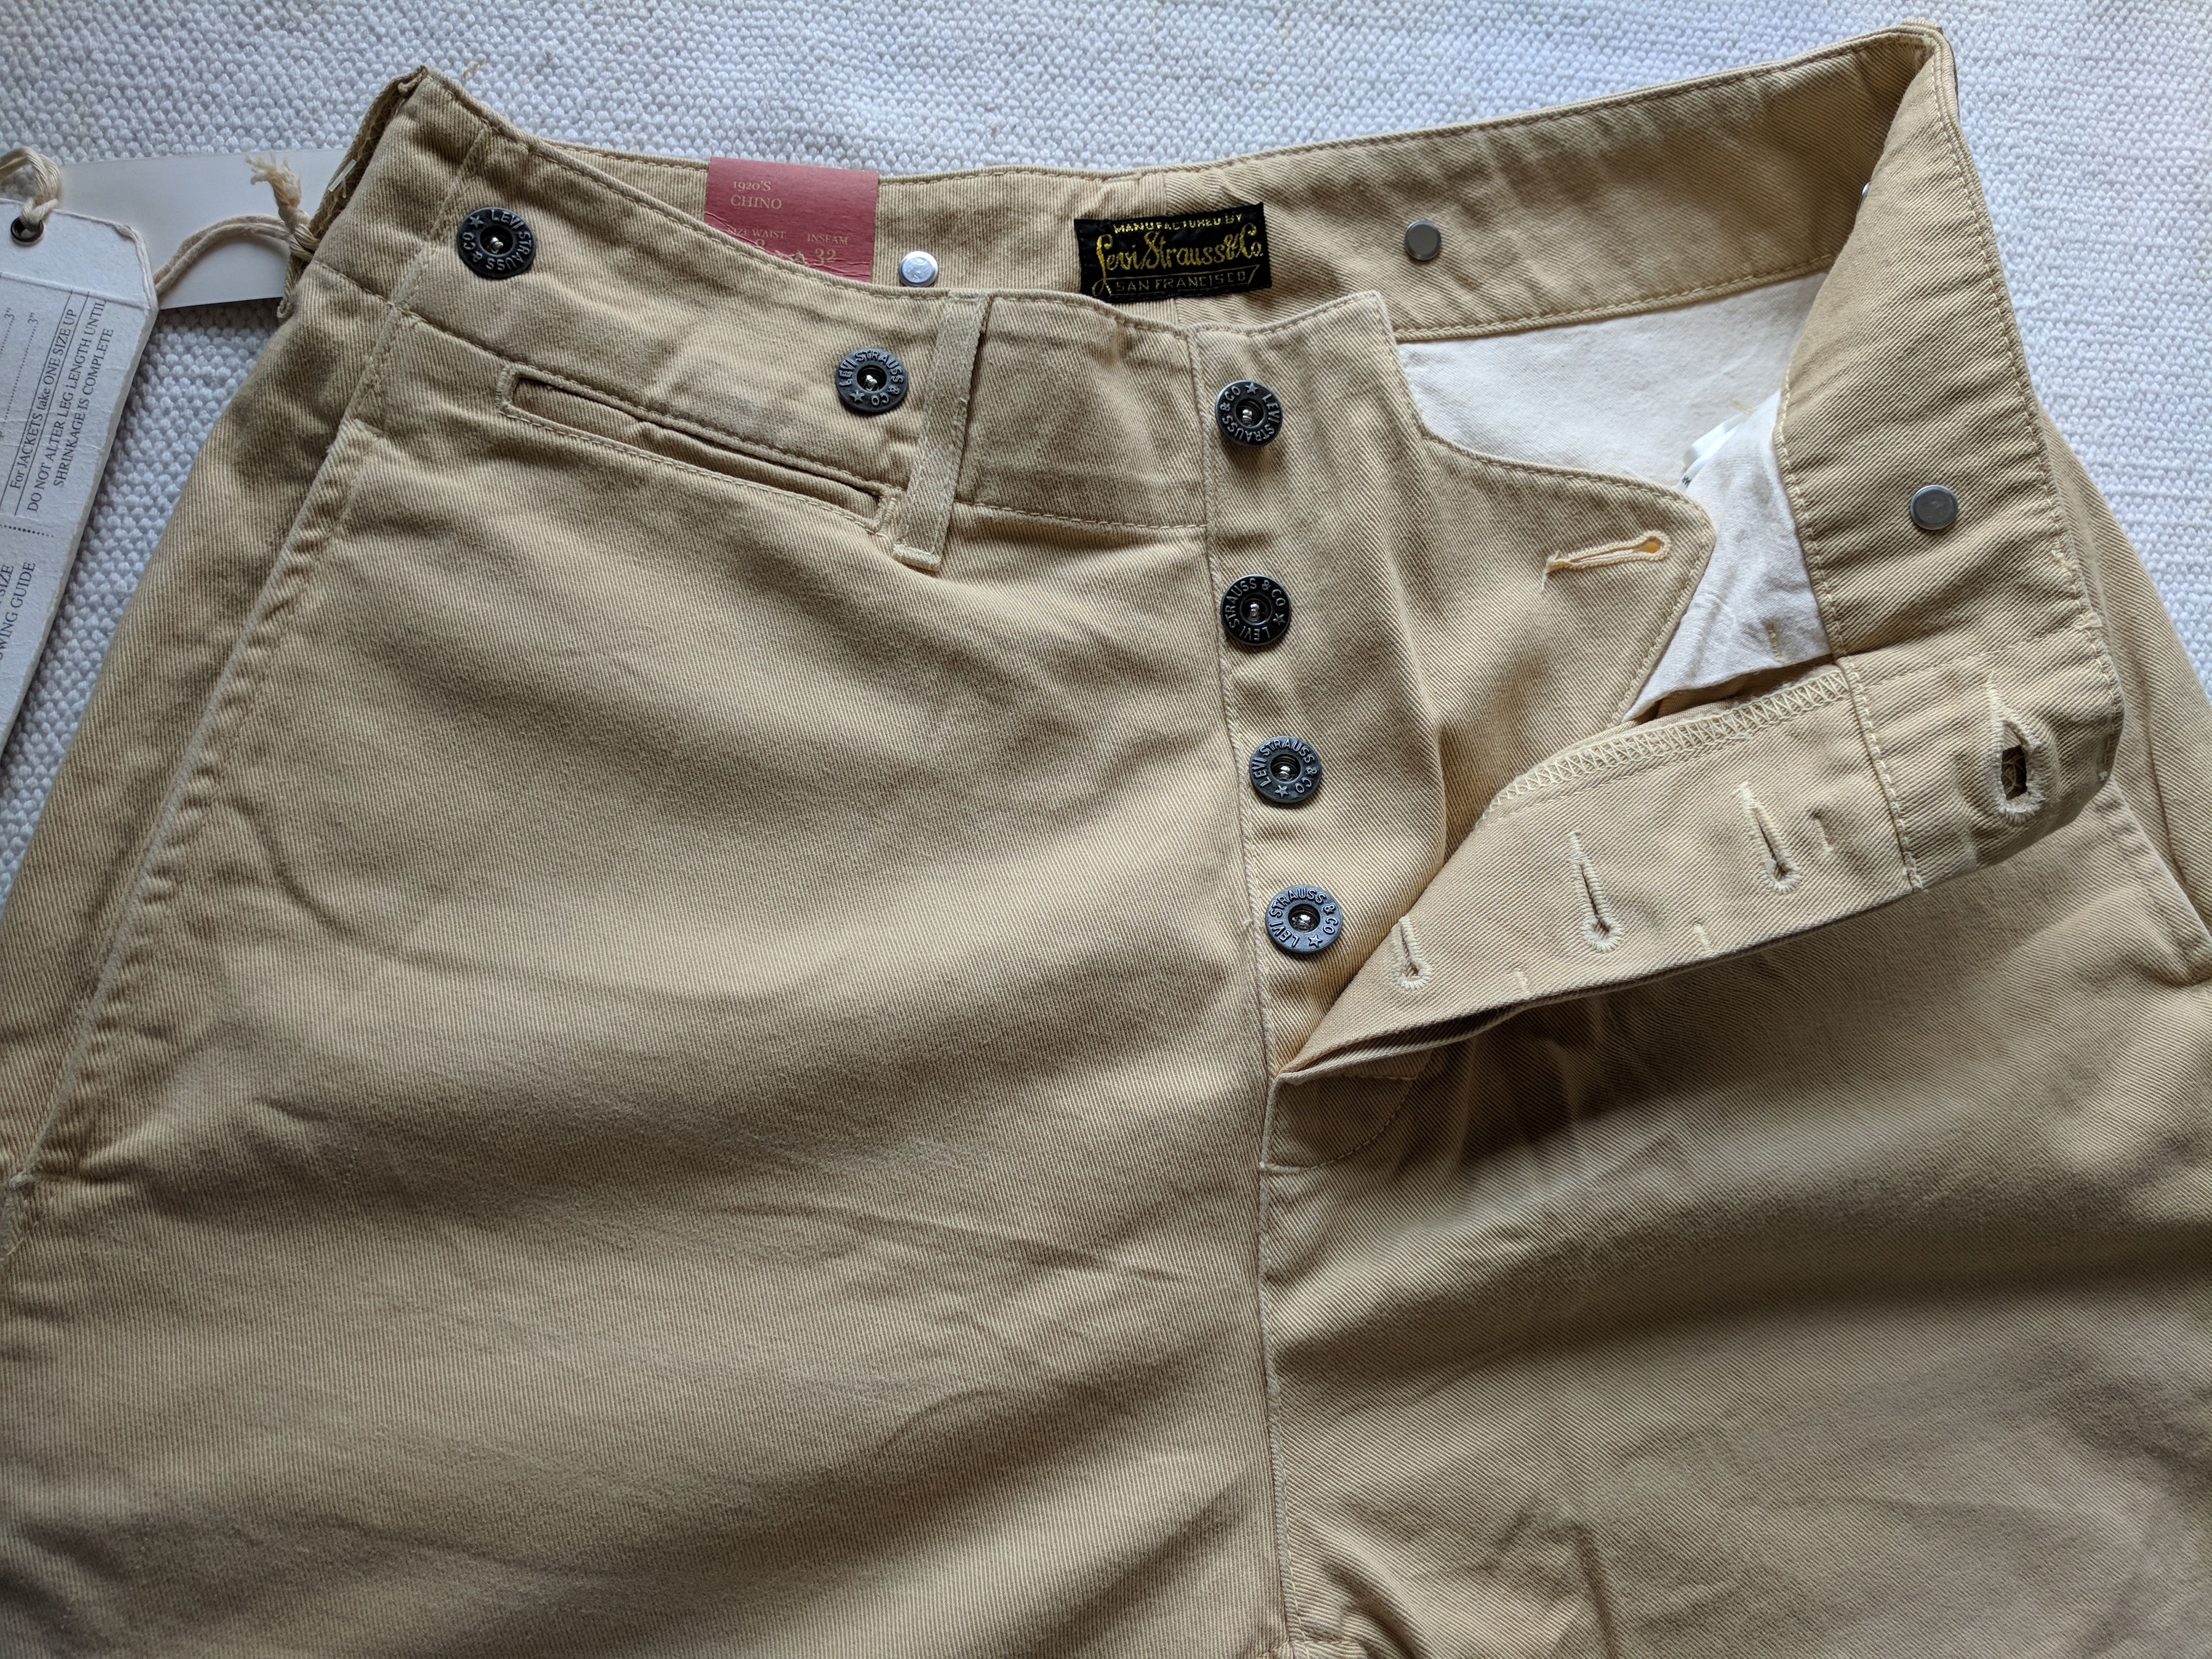 Levi's Levis LVC vintage clothing San Francisco deadstock khakis chino 1920s style pants size 29 30 Size US 29 - 6 Thumbnail